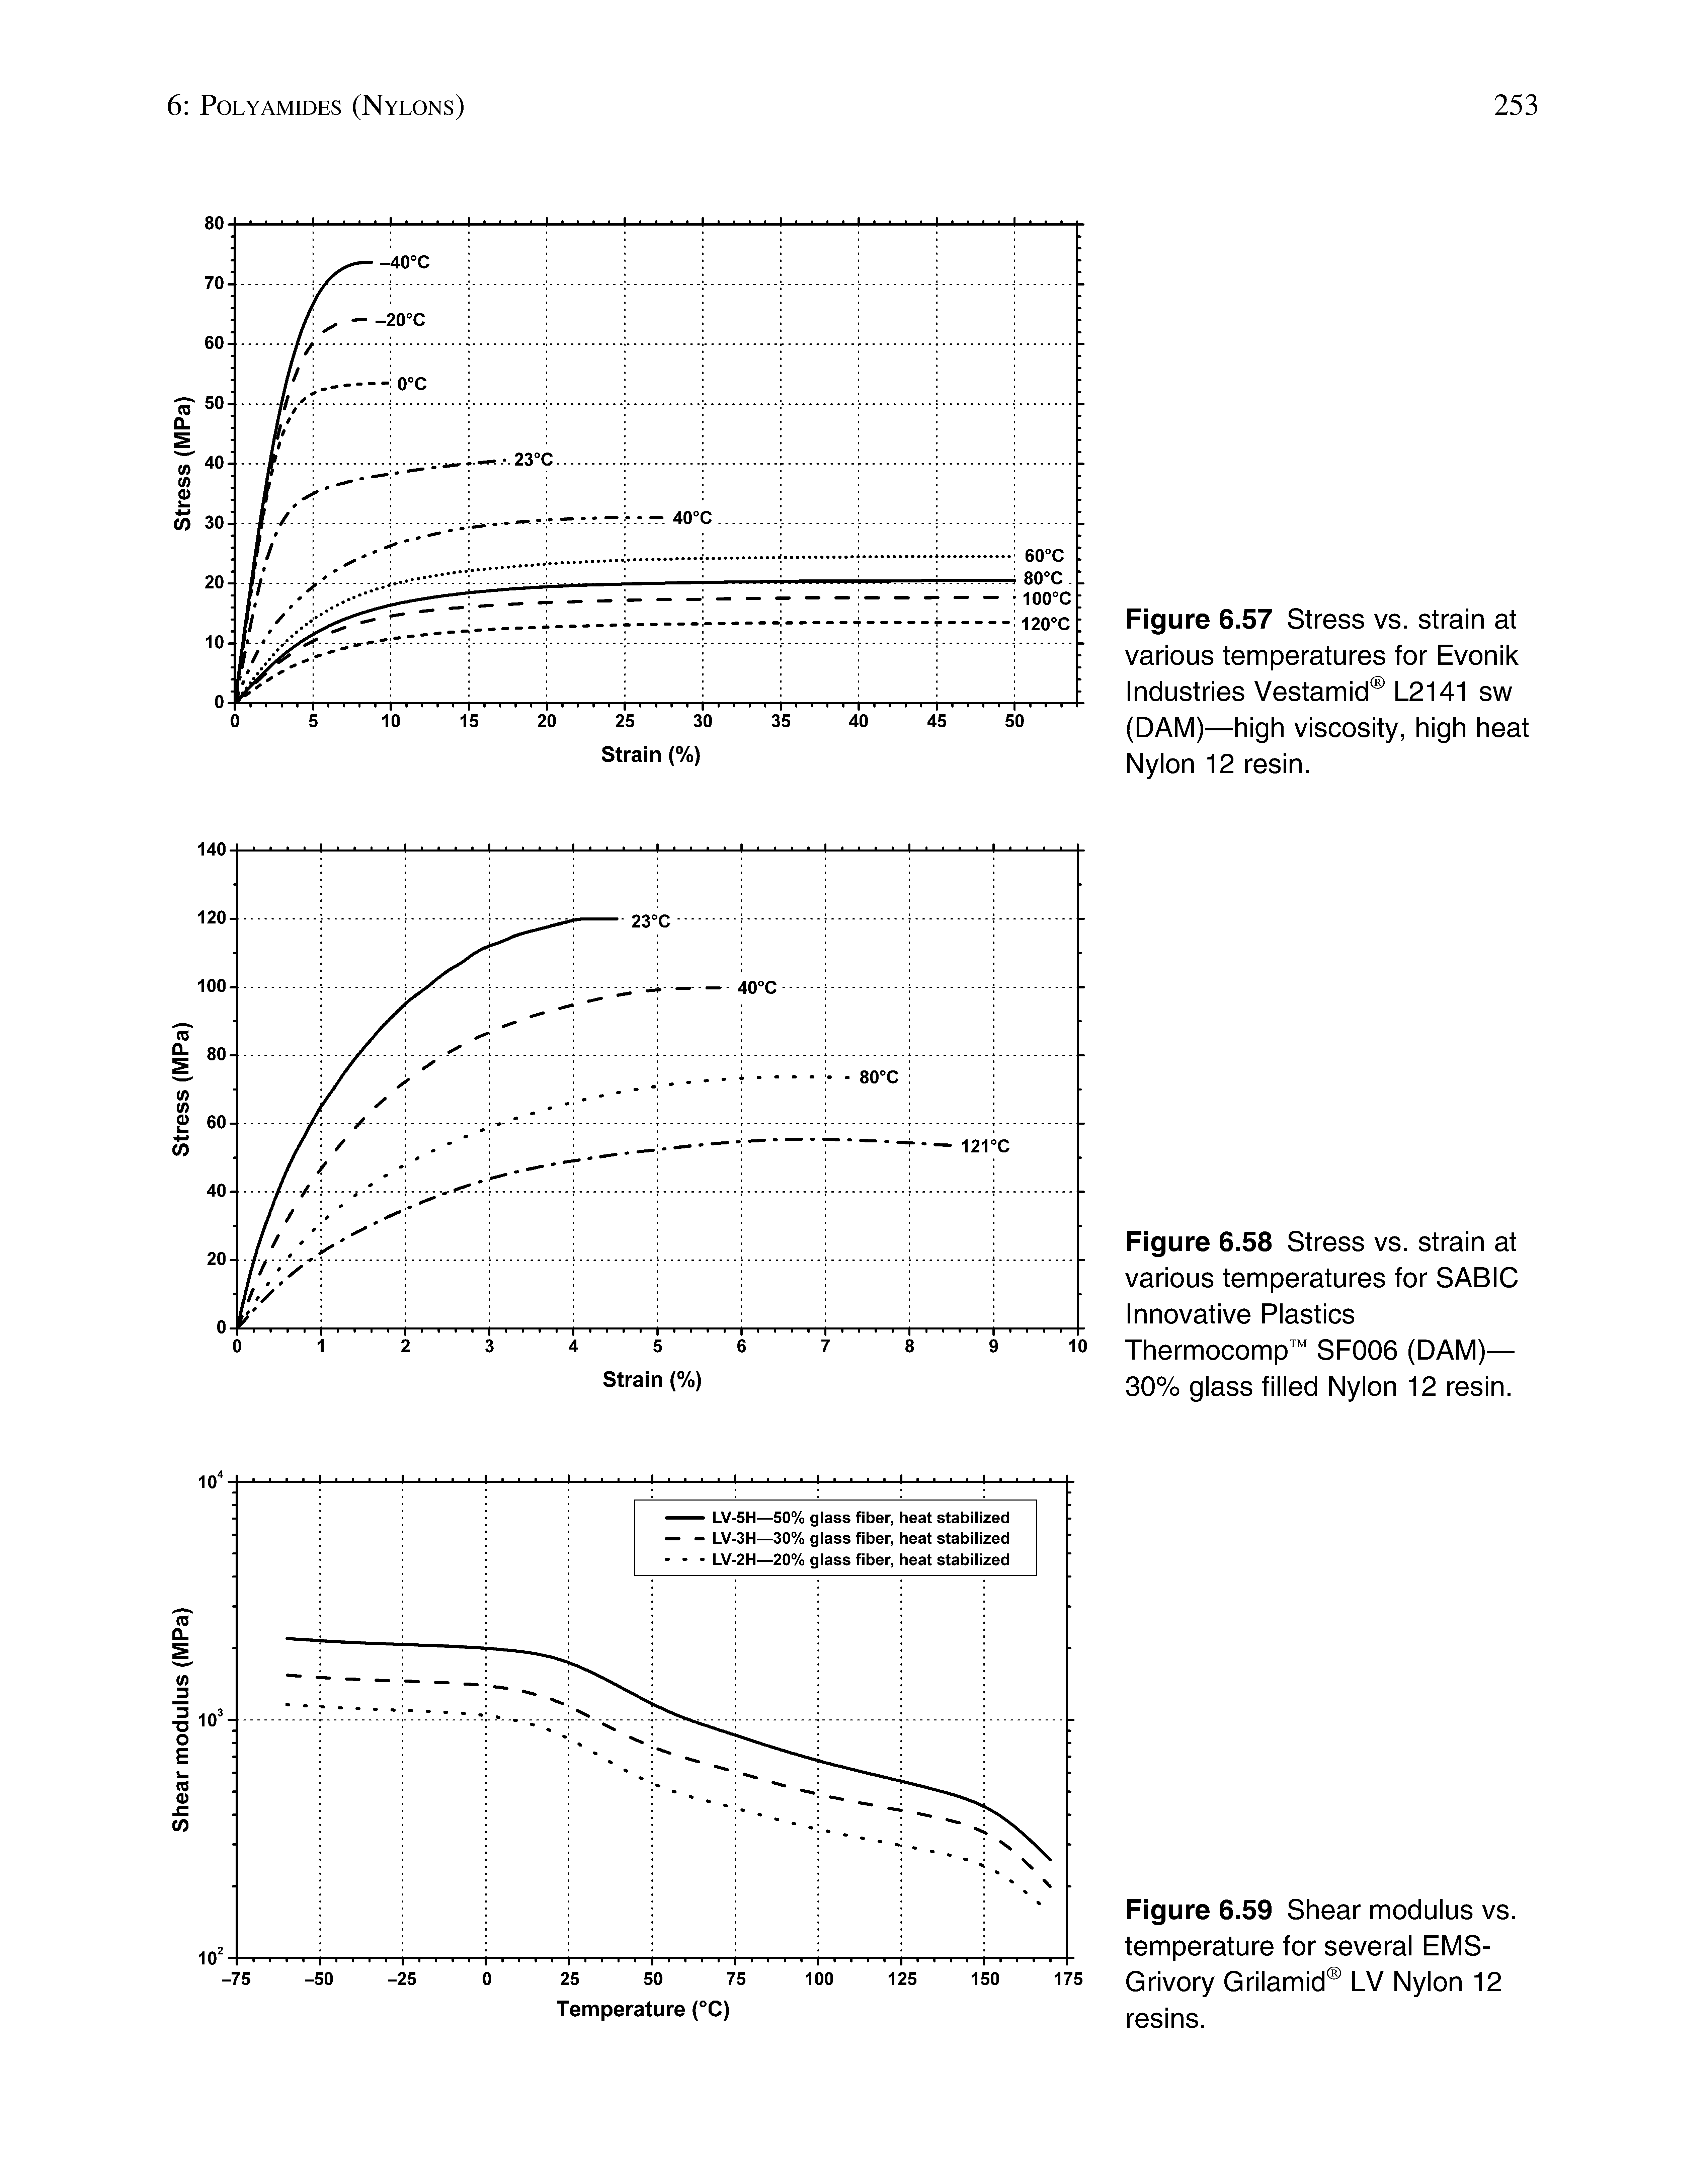 Figure 6.59 Shear modulus vs. temperature for several EMS-Grivory Grilamid LV Nylon 12 resins.